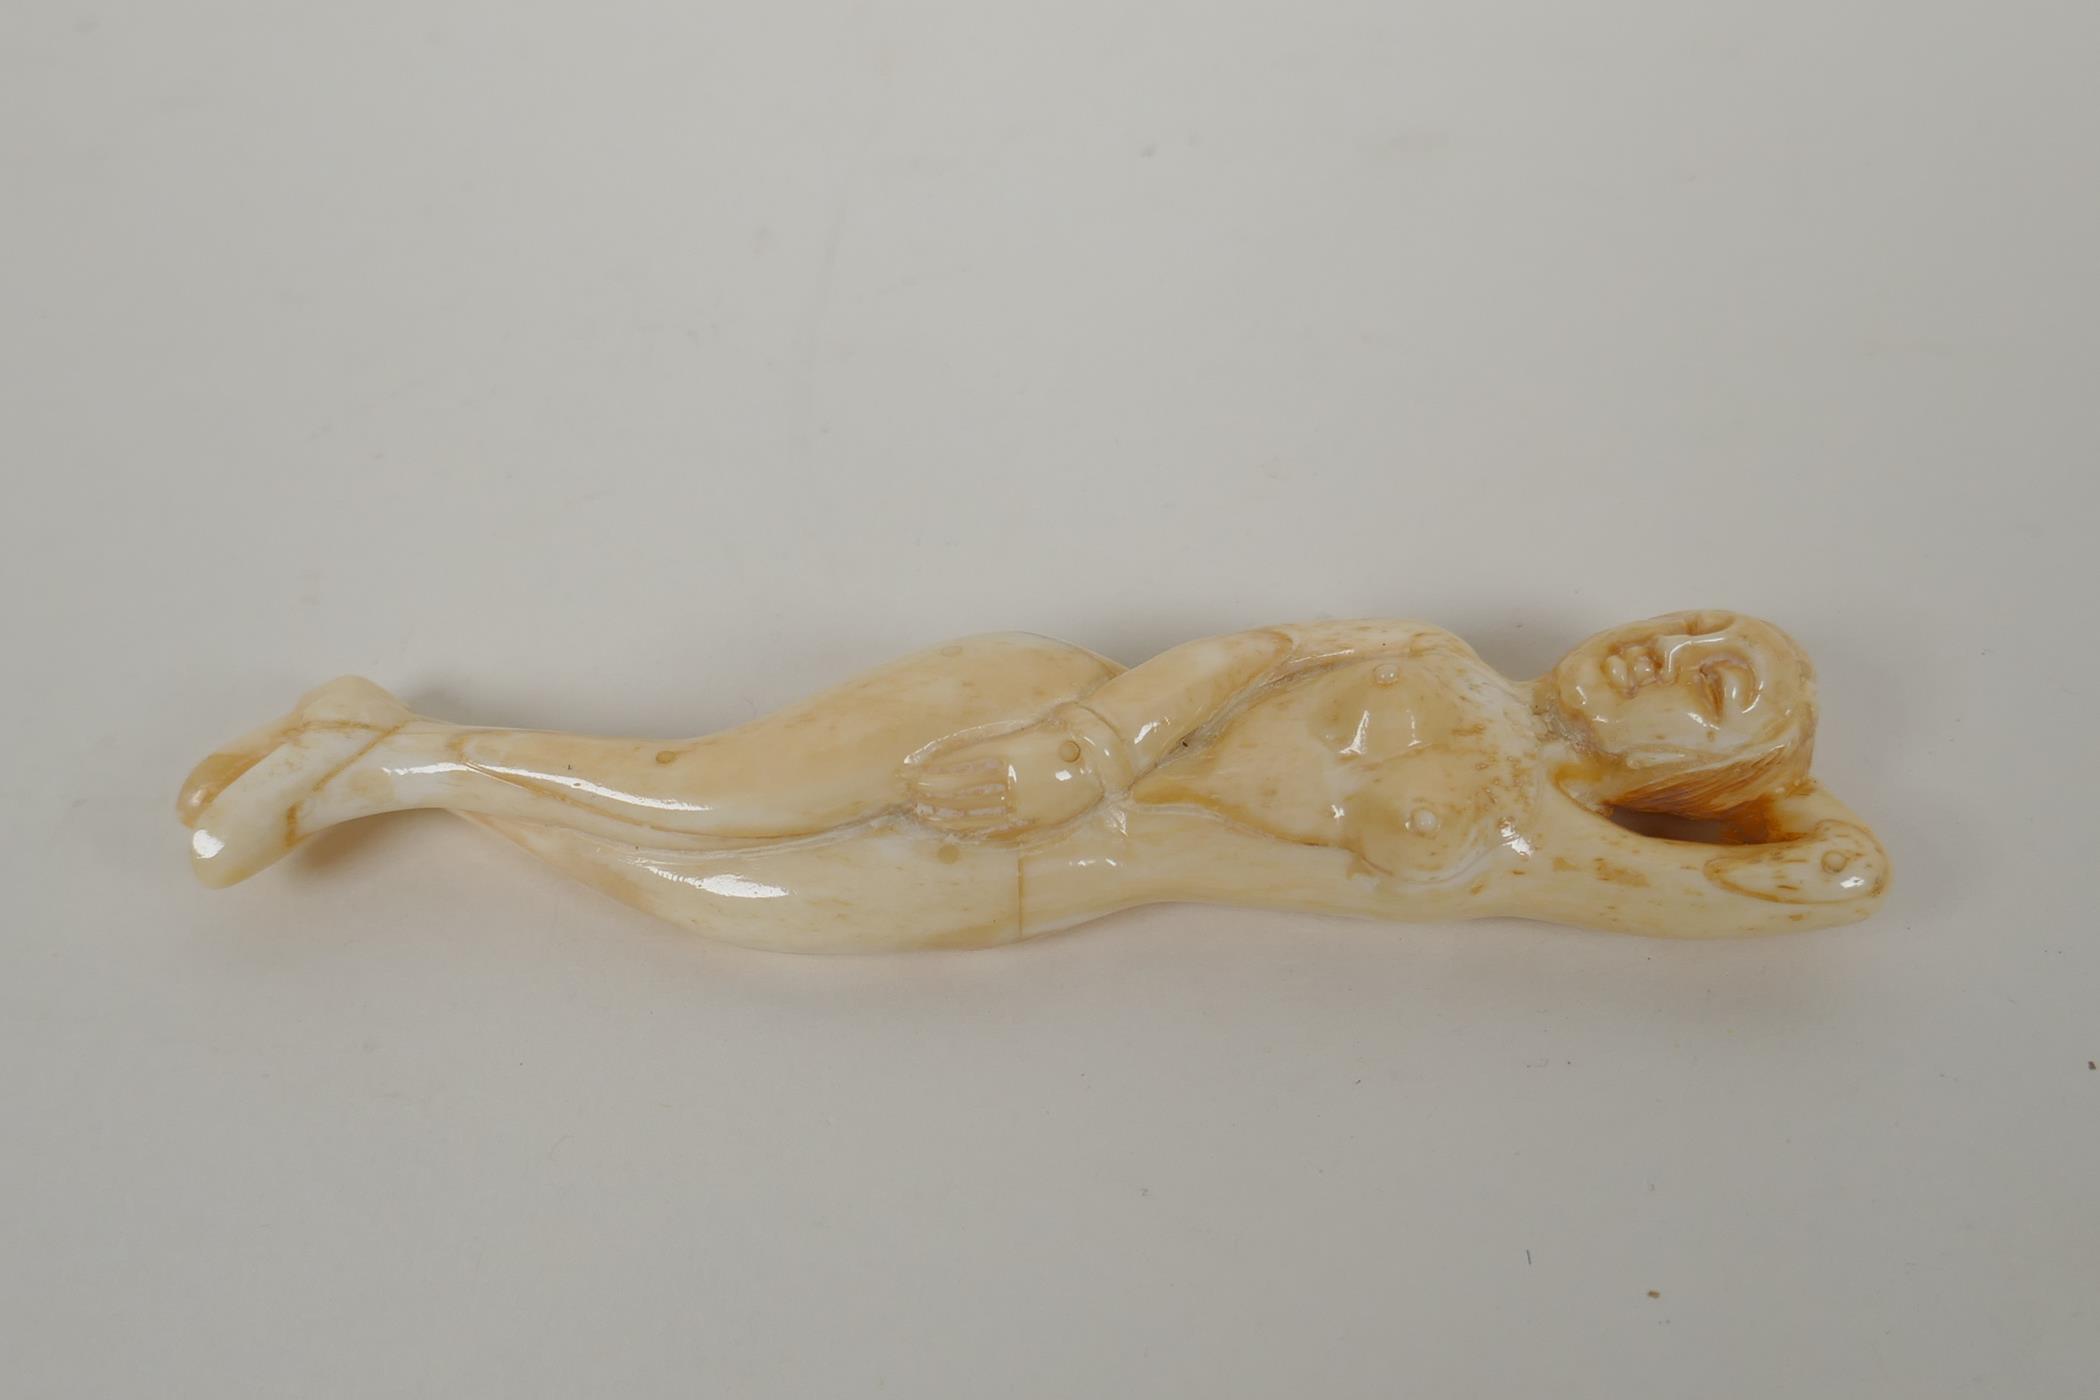 A carved bone figure of a nude, oriental woman, 13cm  long